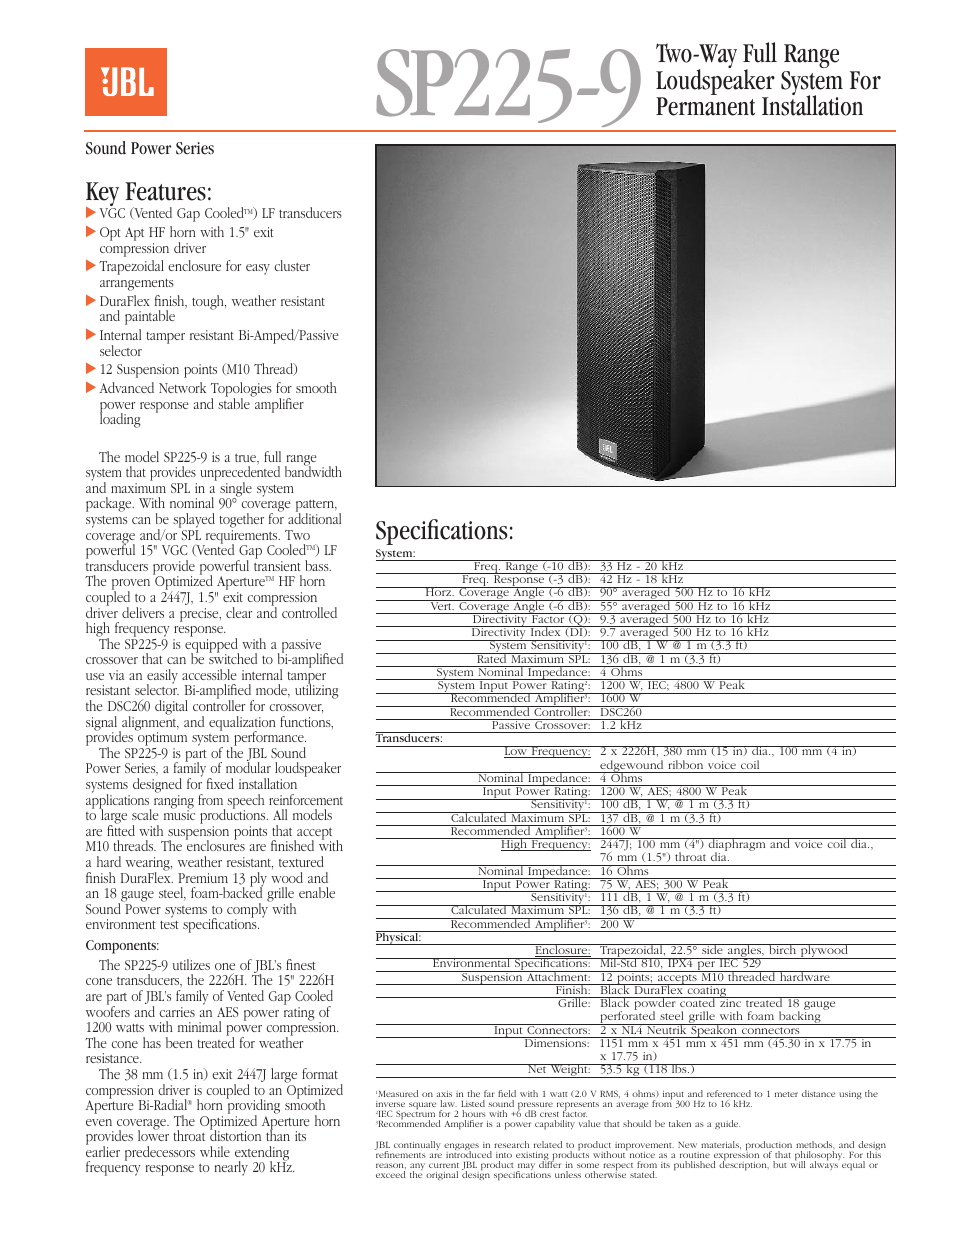 Two-Way Full Range Loudspeaker System For Permanent Installation SP225-9